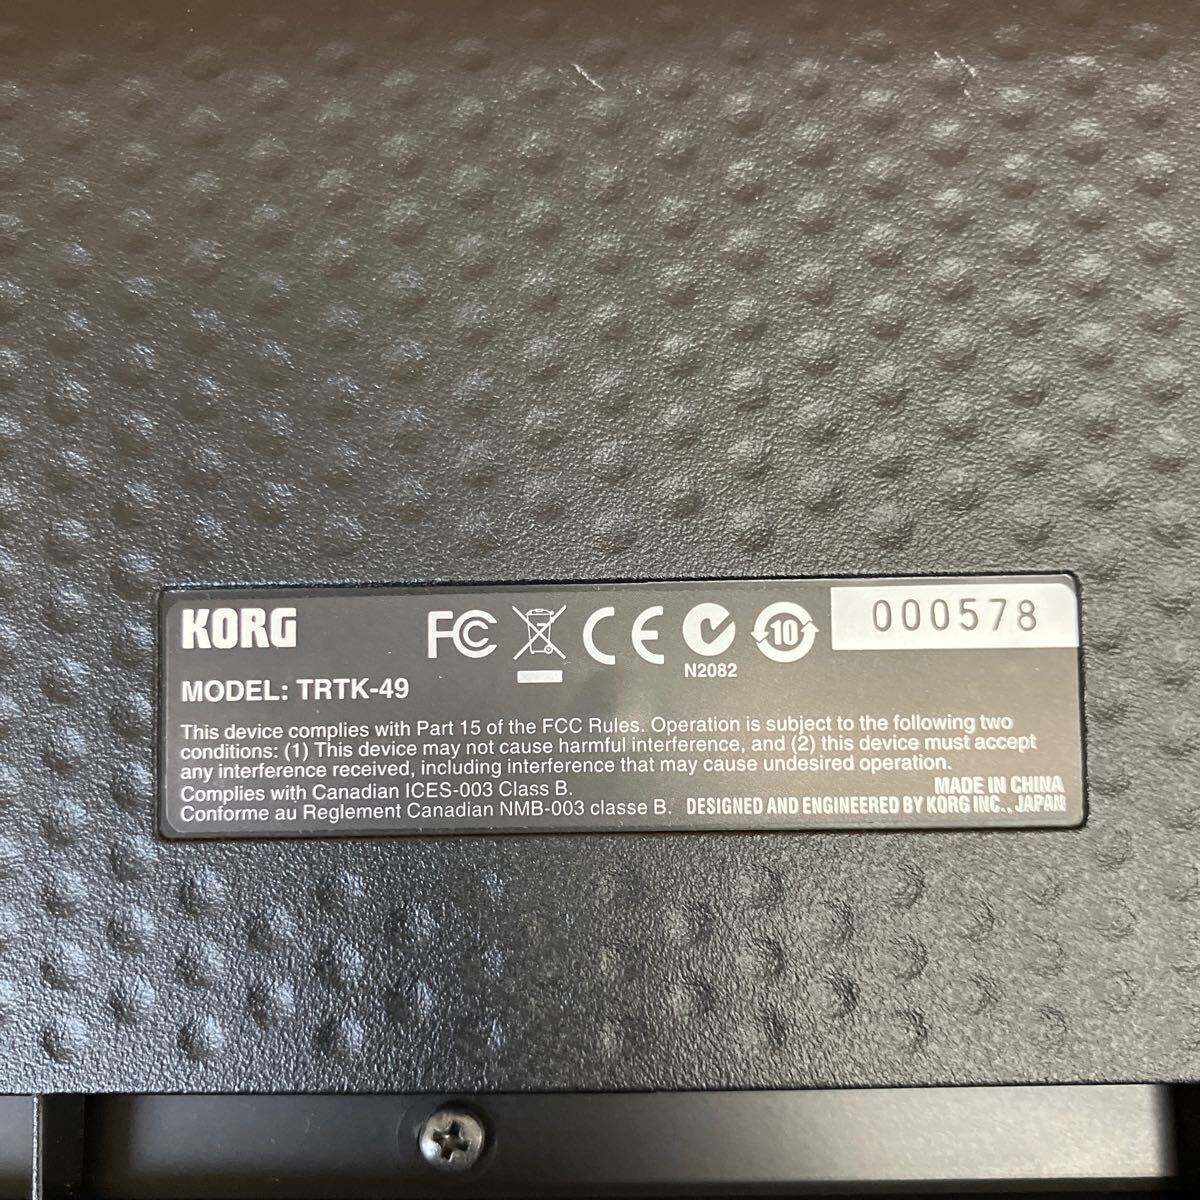 *[ selling out ]KORG Korg TRITON taktiletak tile controller keyboard TRTK-49 electrification has confirmed 49 keyboard small size synthesizer 